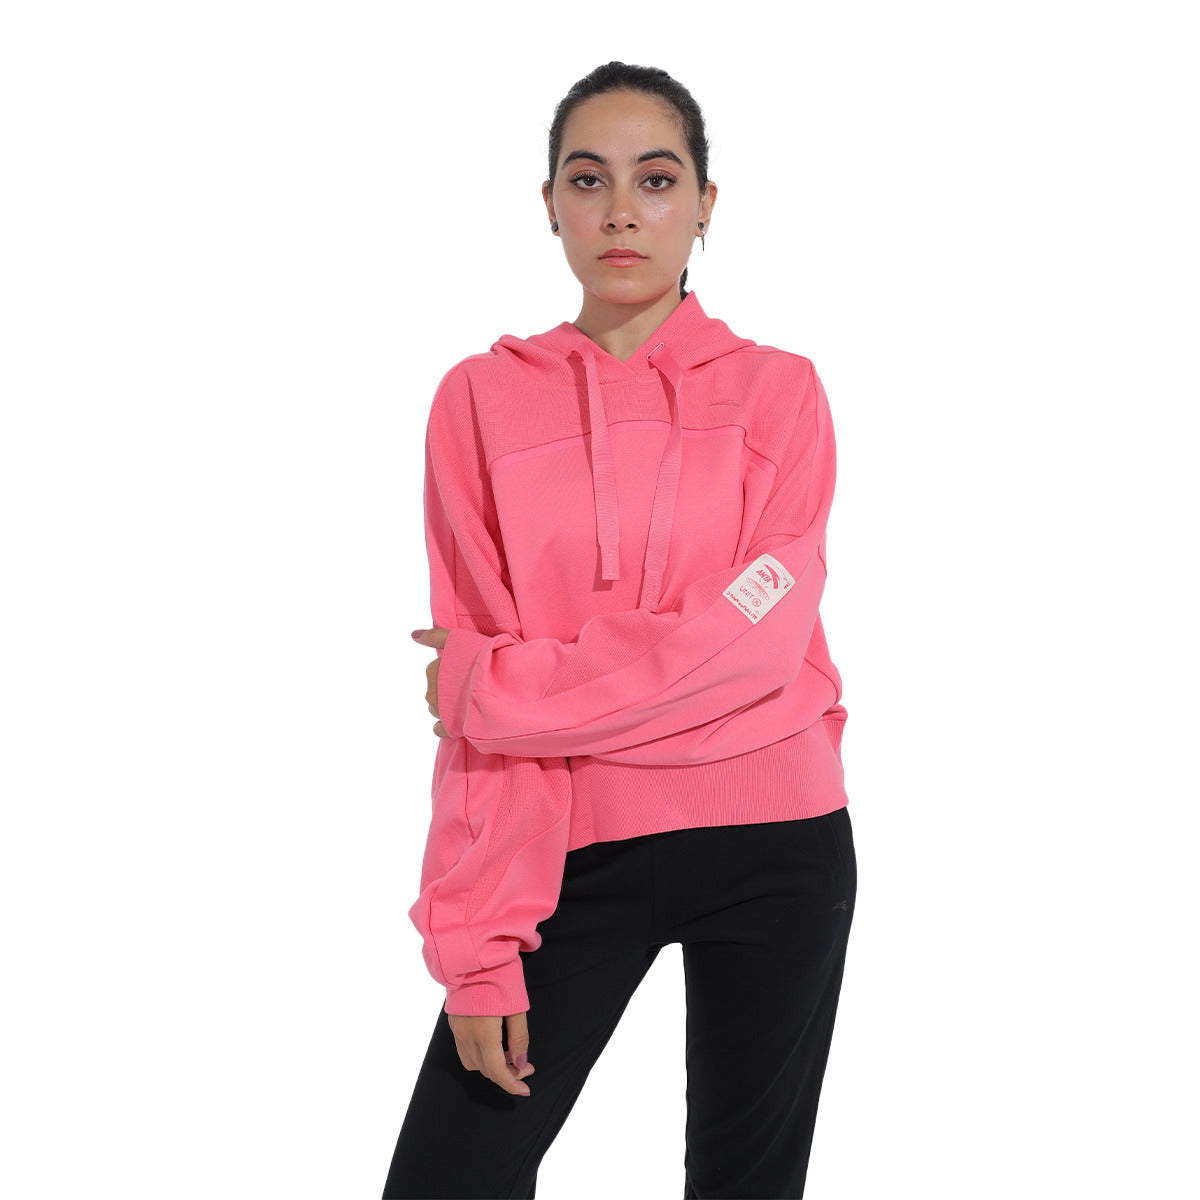 Anta Hooded Sweatshirt For Women, Pink